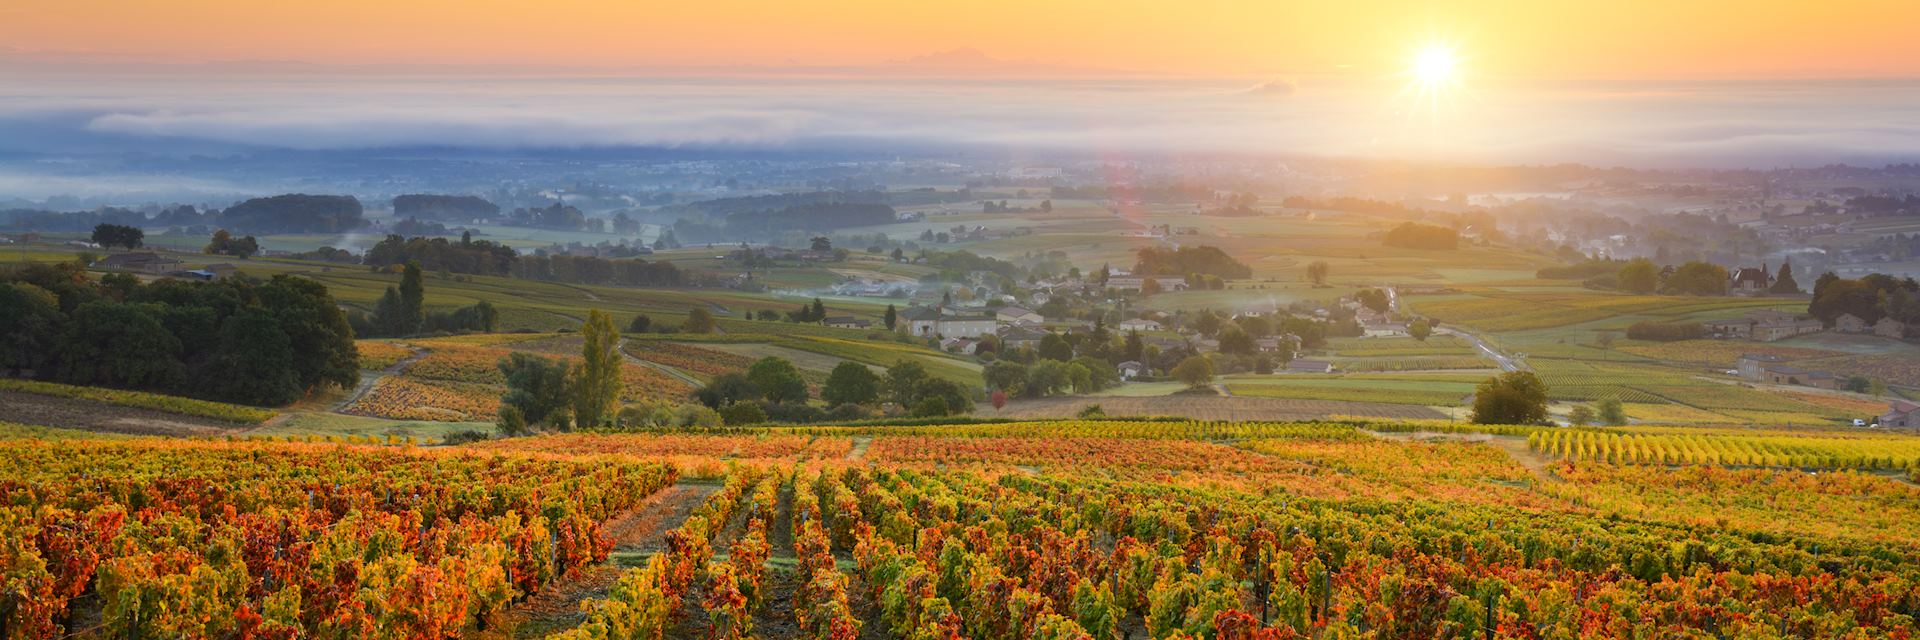 Vineyard in the Beaujolais region